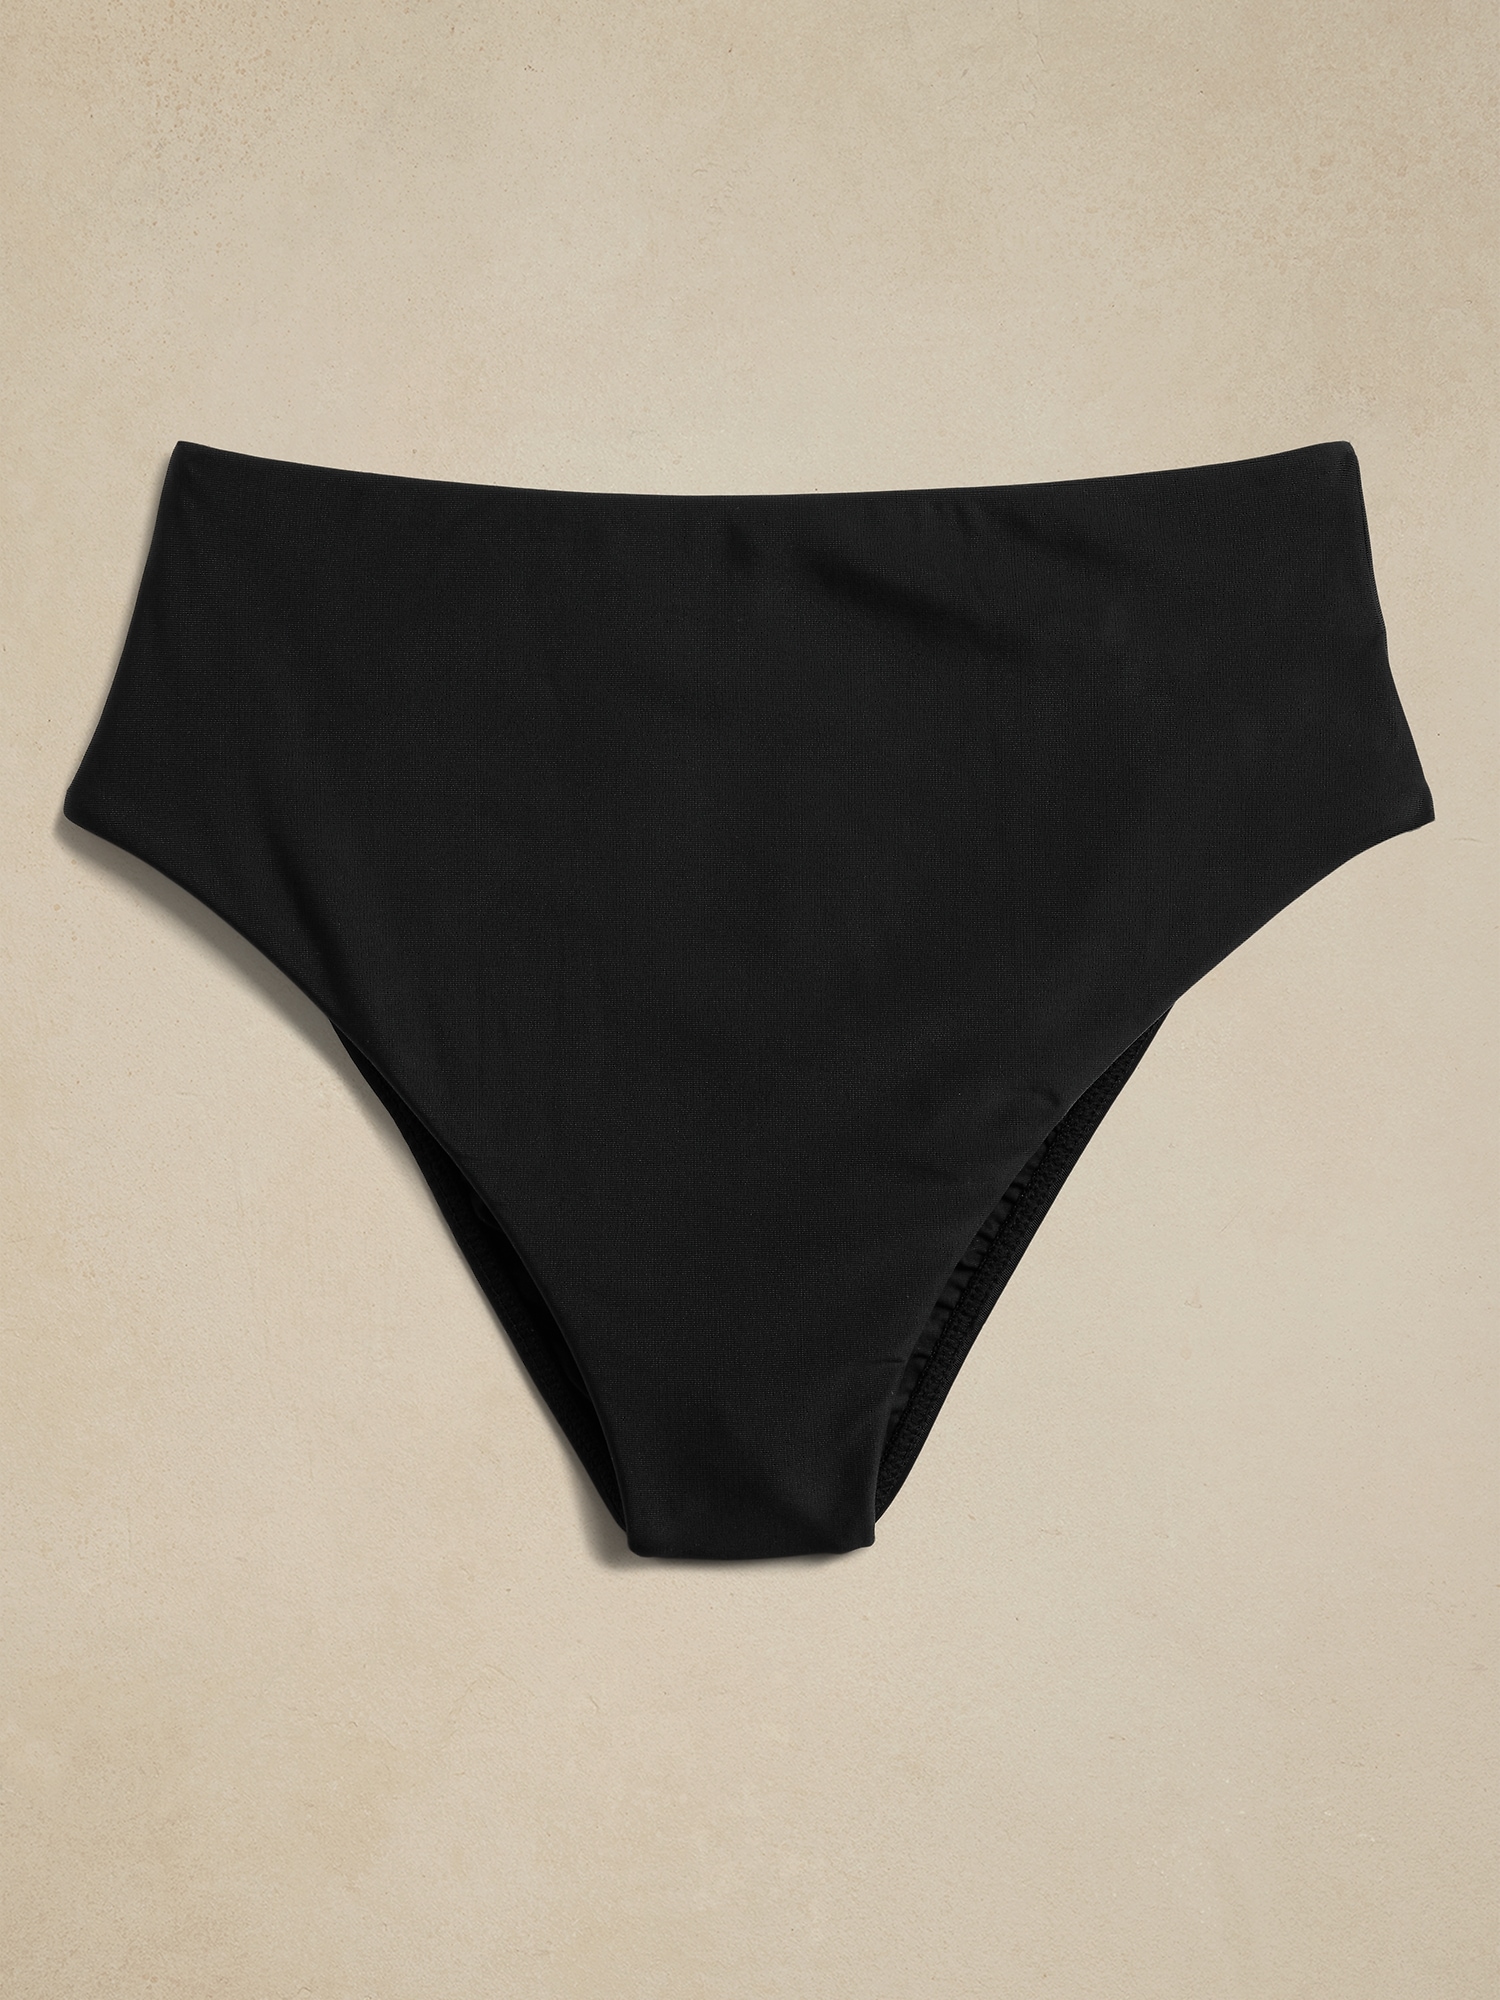 Onia Sarita Textured Bikini Top & Ashley Textured Bikini Bottom